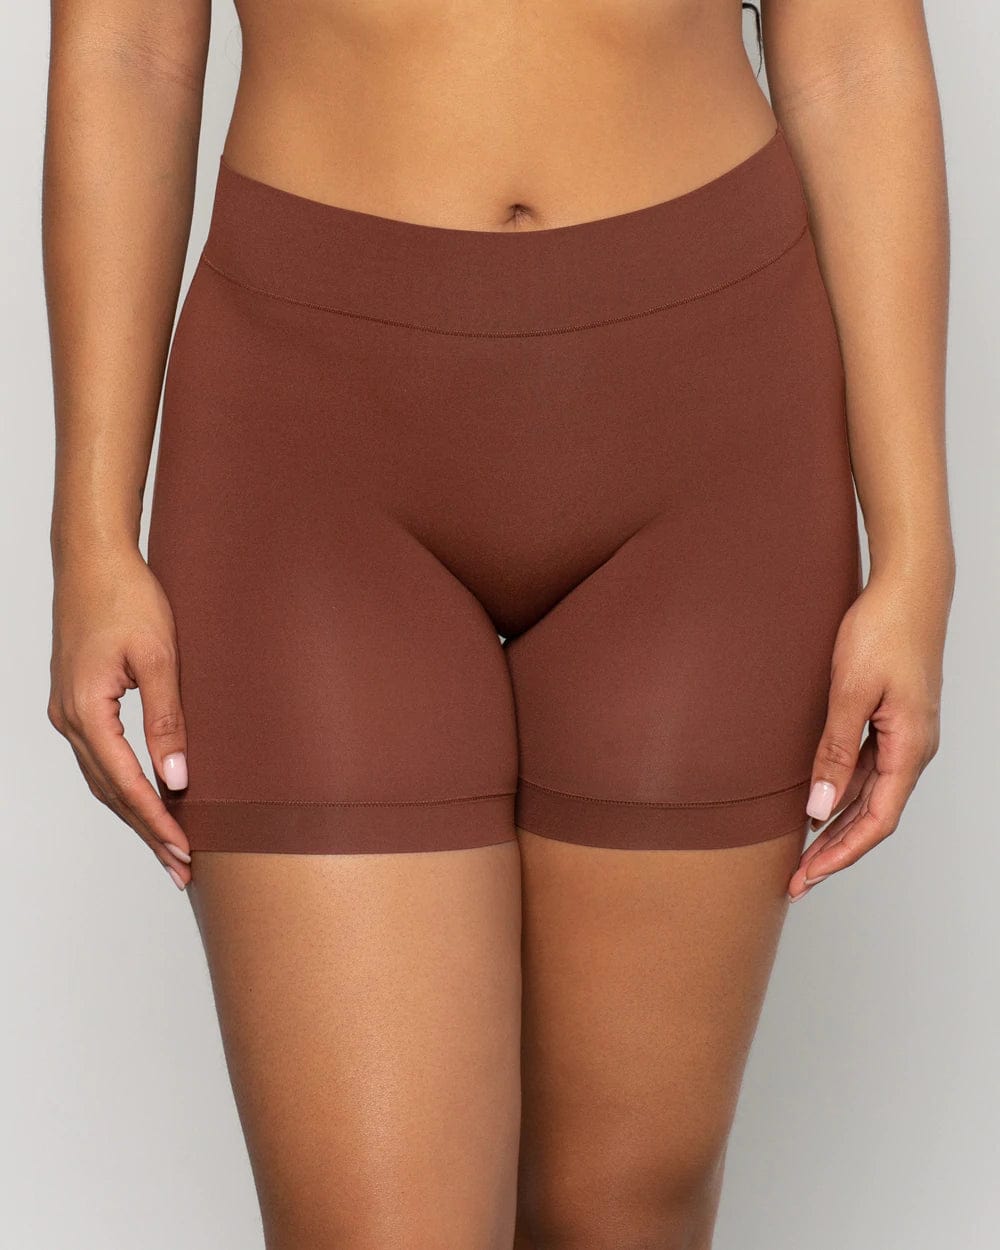 Curvy Couture Underwear Chocolate Nude / L/XL Slip Short - Chocolate Nude